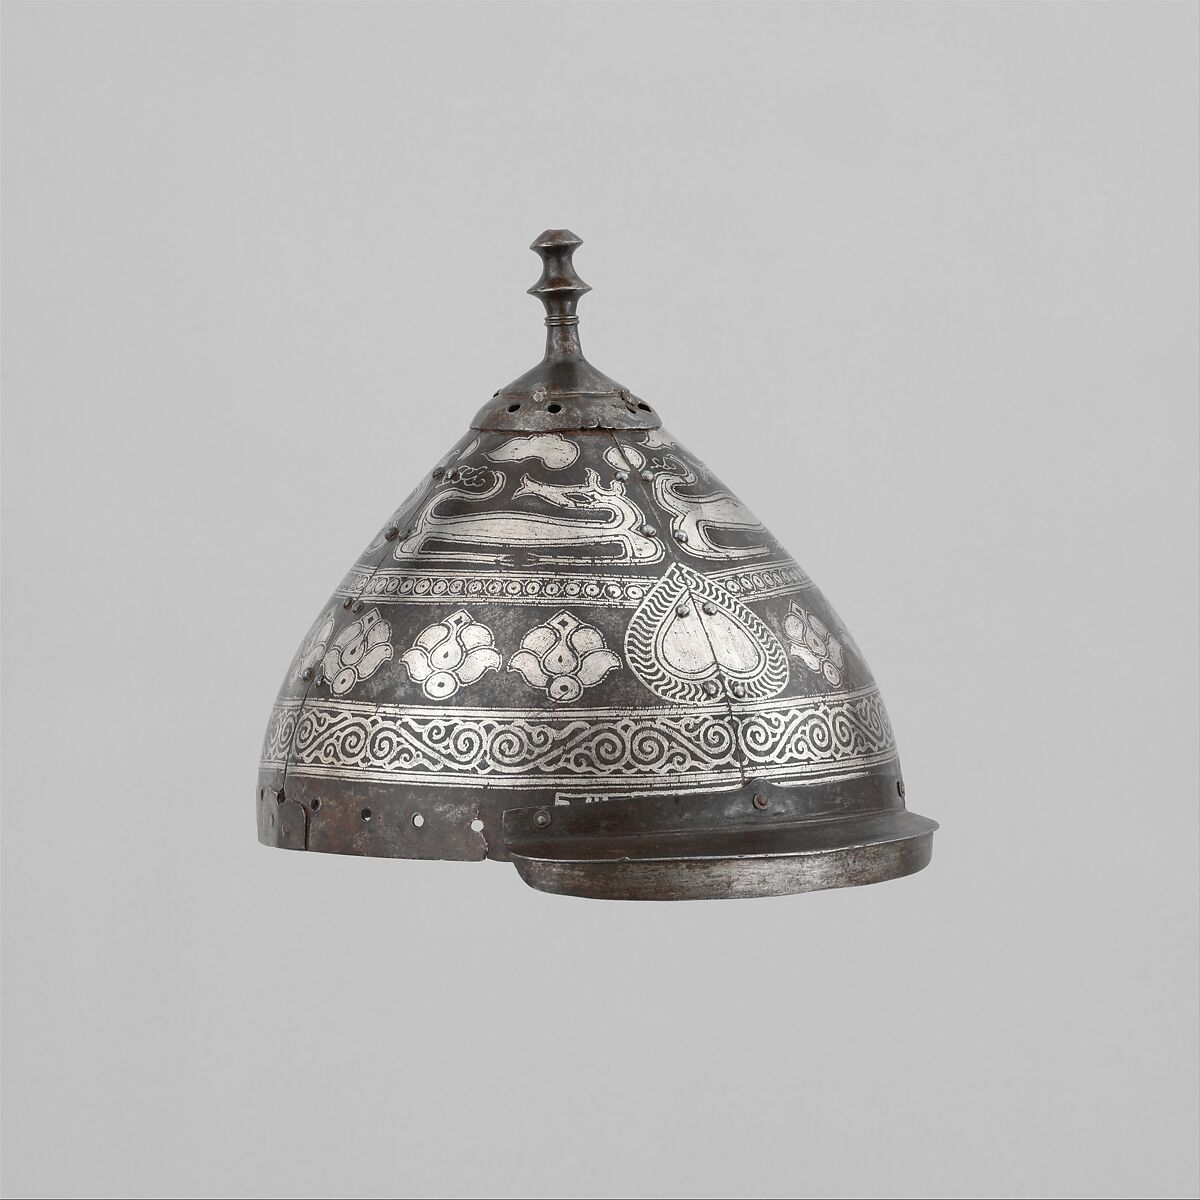 Helmet, Iron, silver, Tibetan or Central Asian